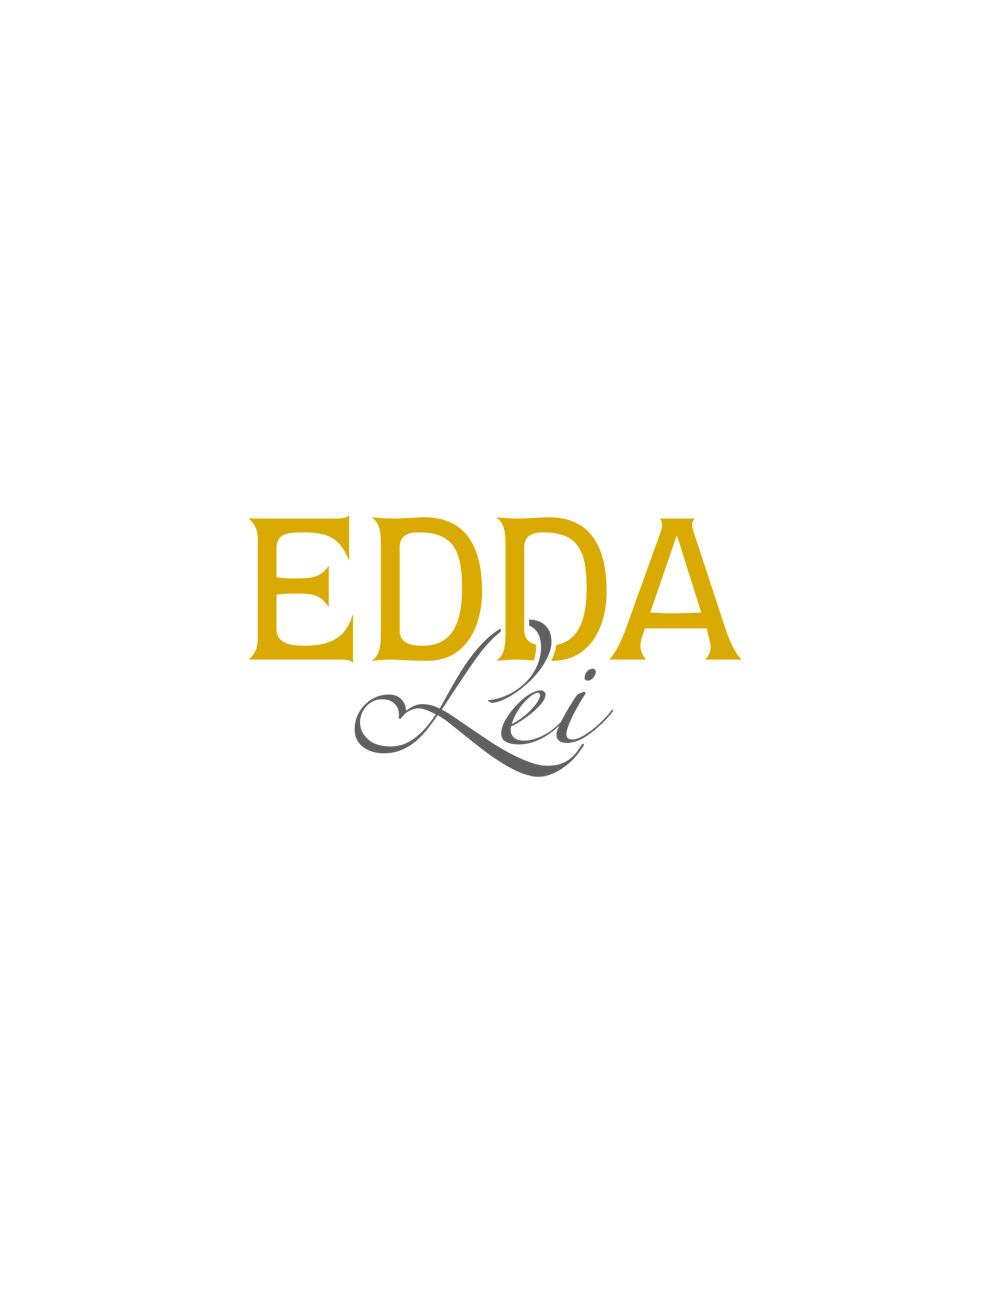 Edda wine logo